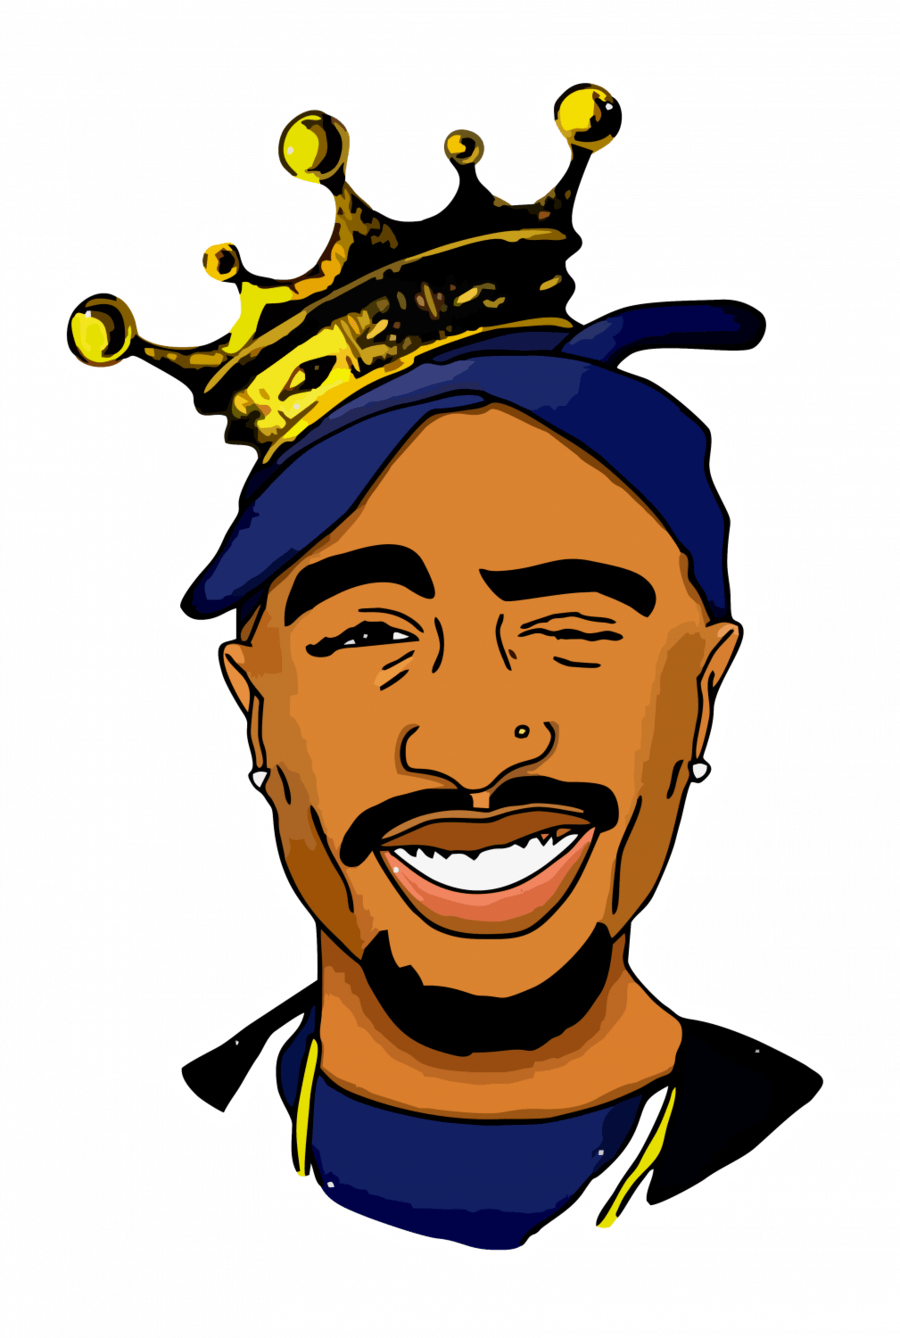 Wallpaper Tupac Comic ~ Pinterest: awkomycheerio | Rapper art, 2pac art